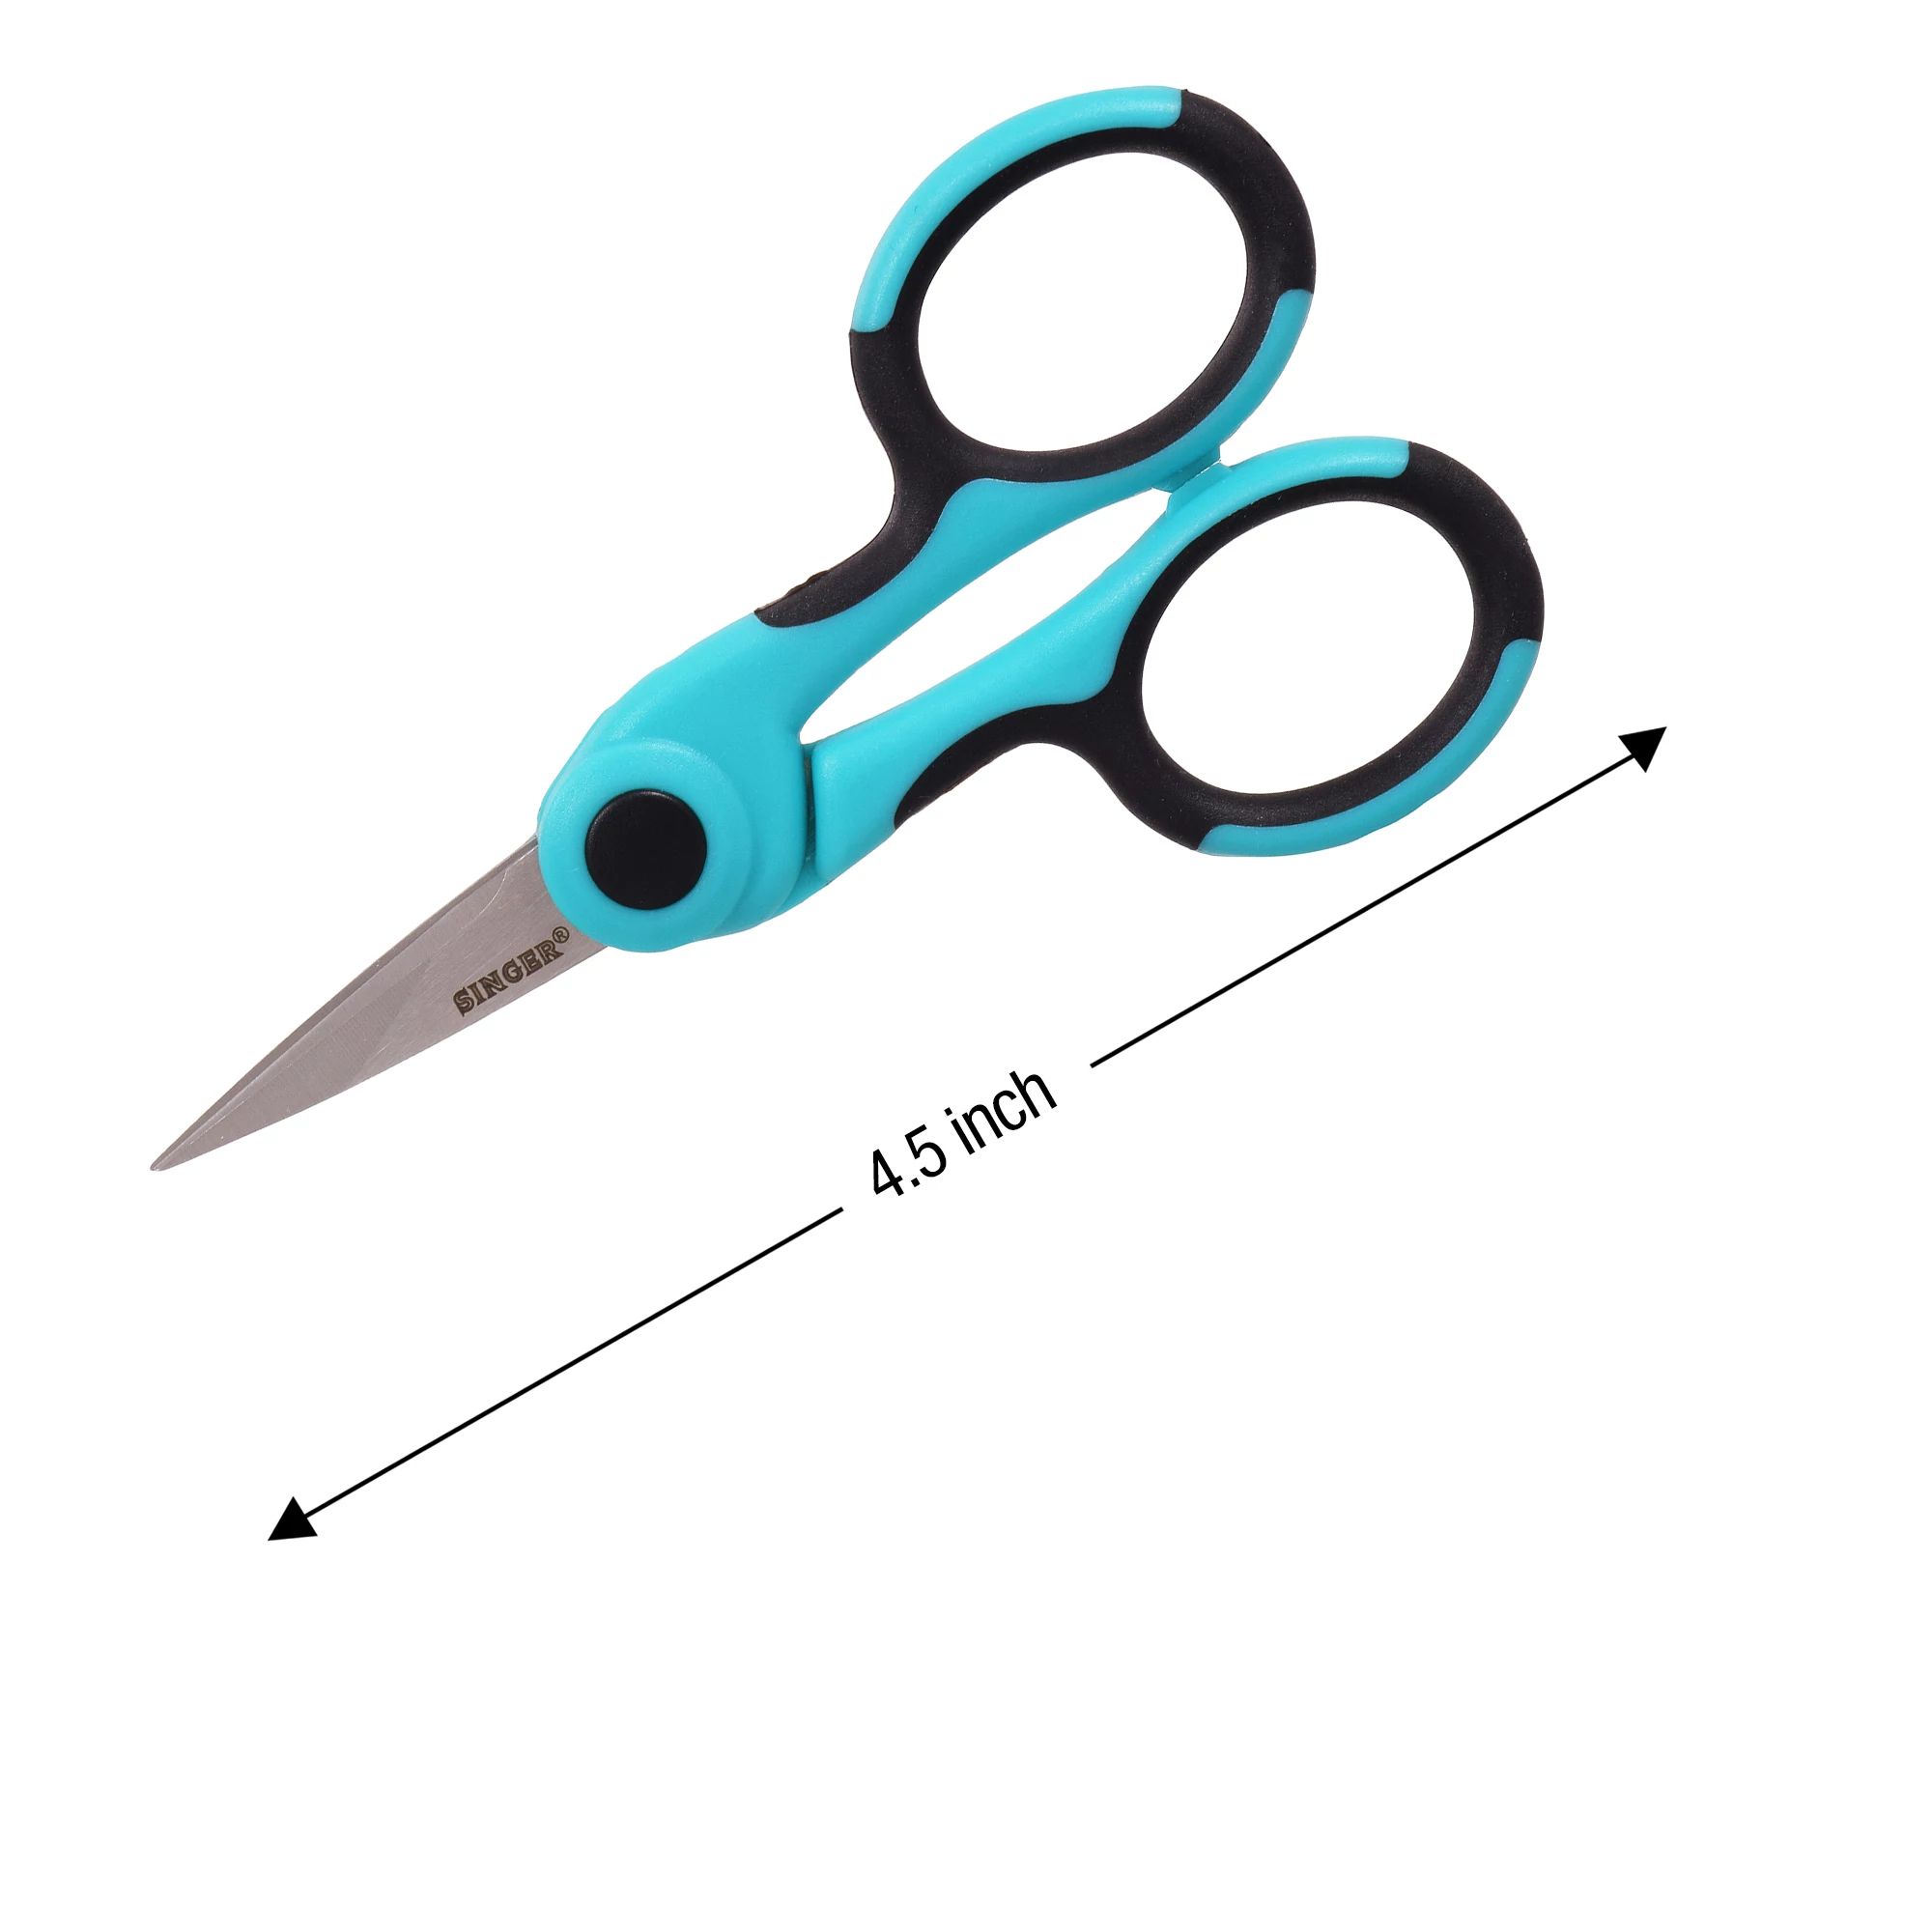 Lilac ProSeries Scissors Set | Singer #40441DS